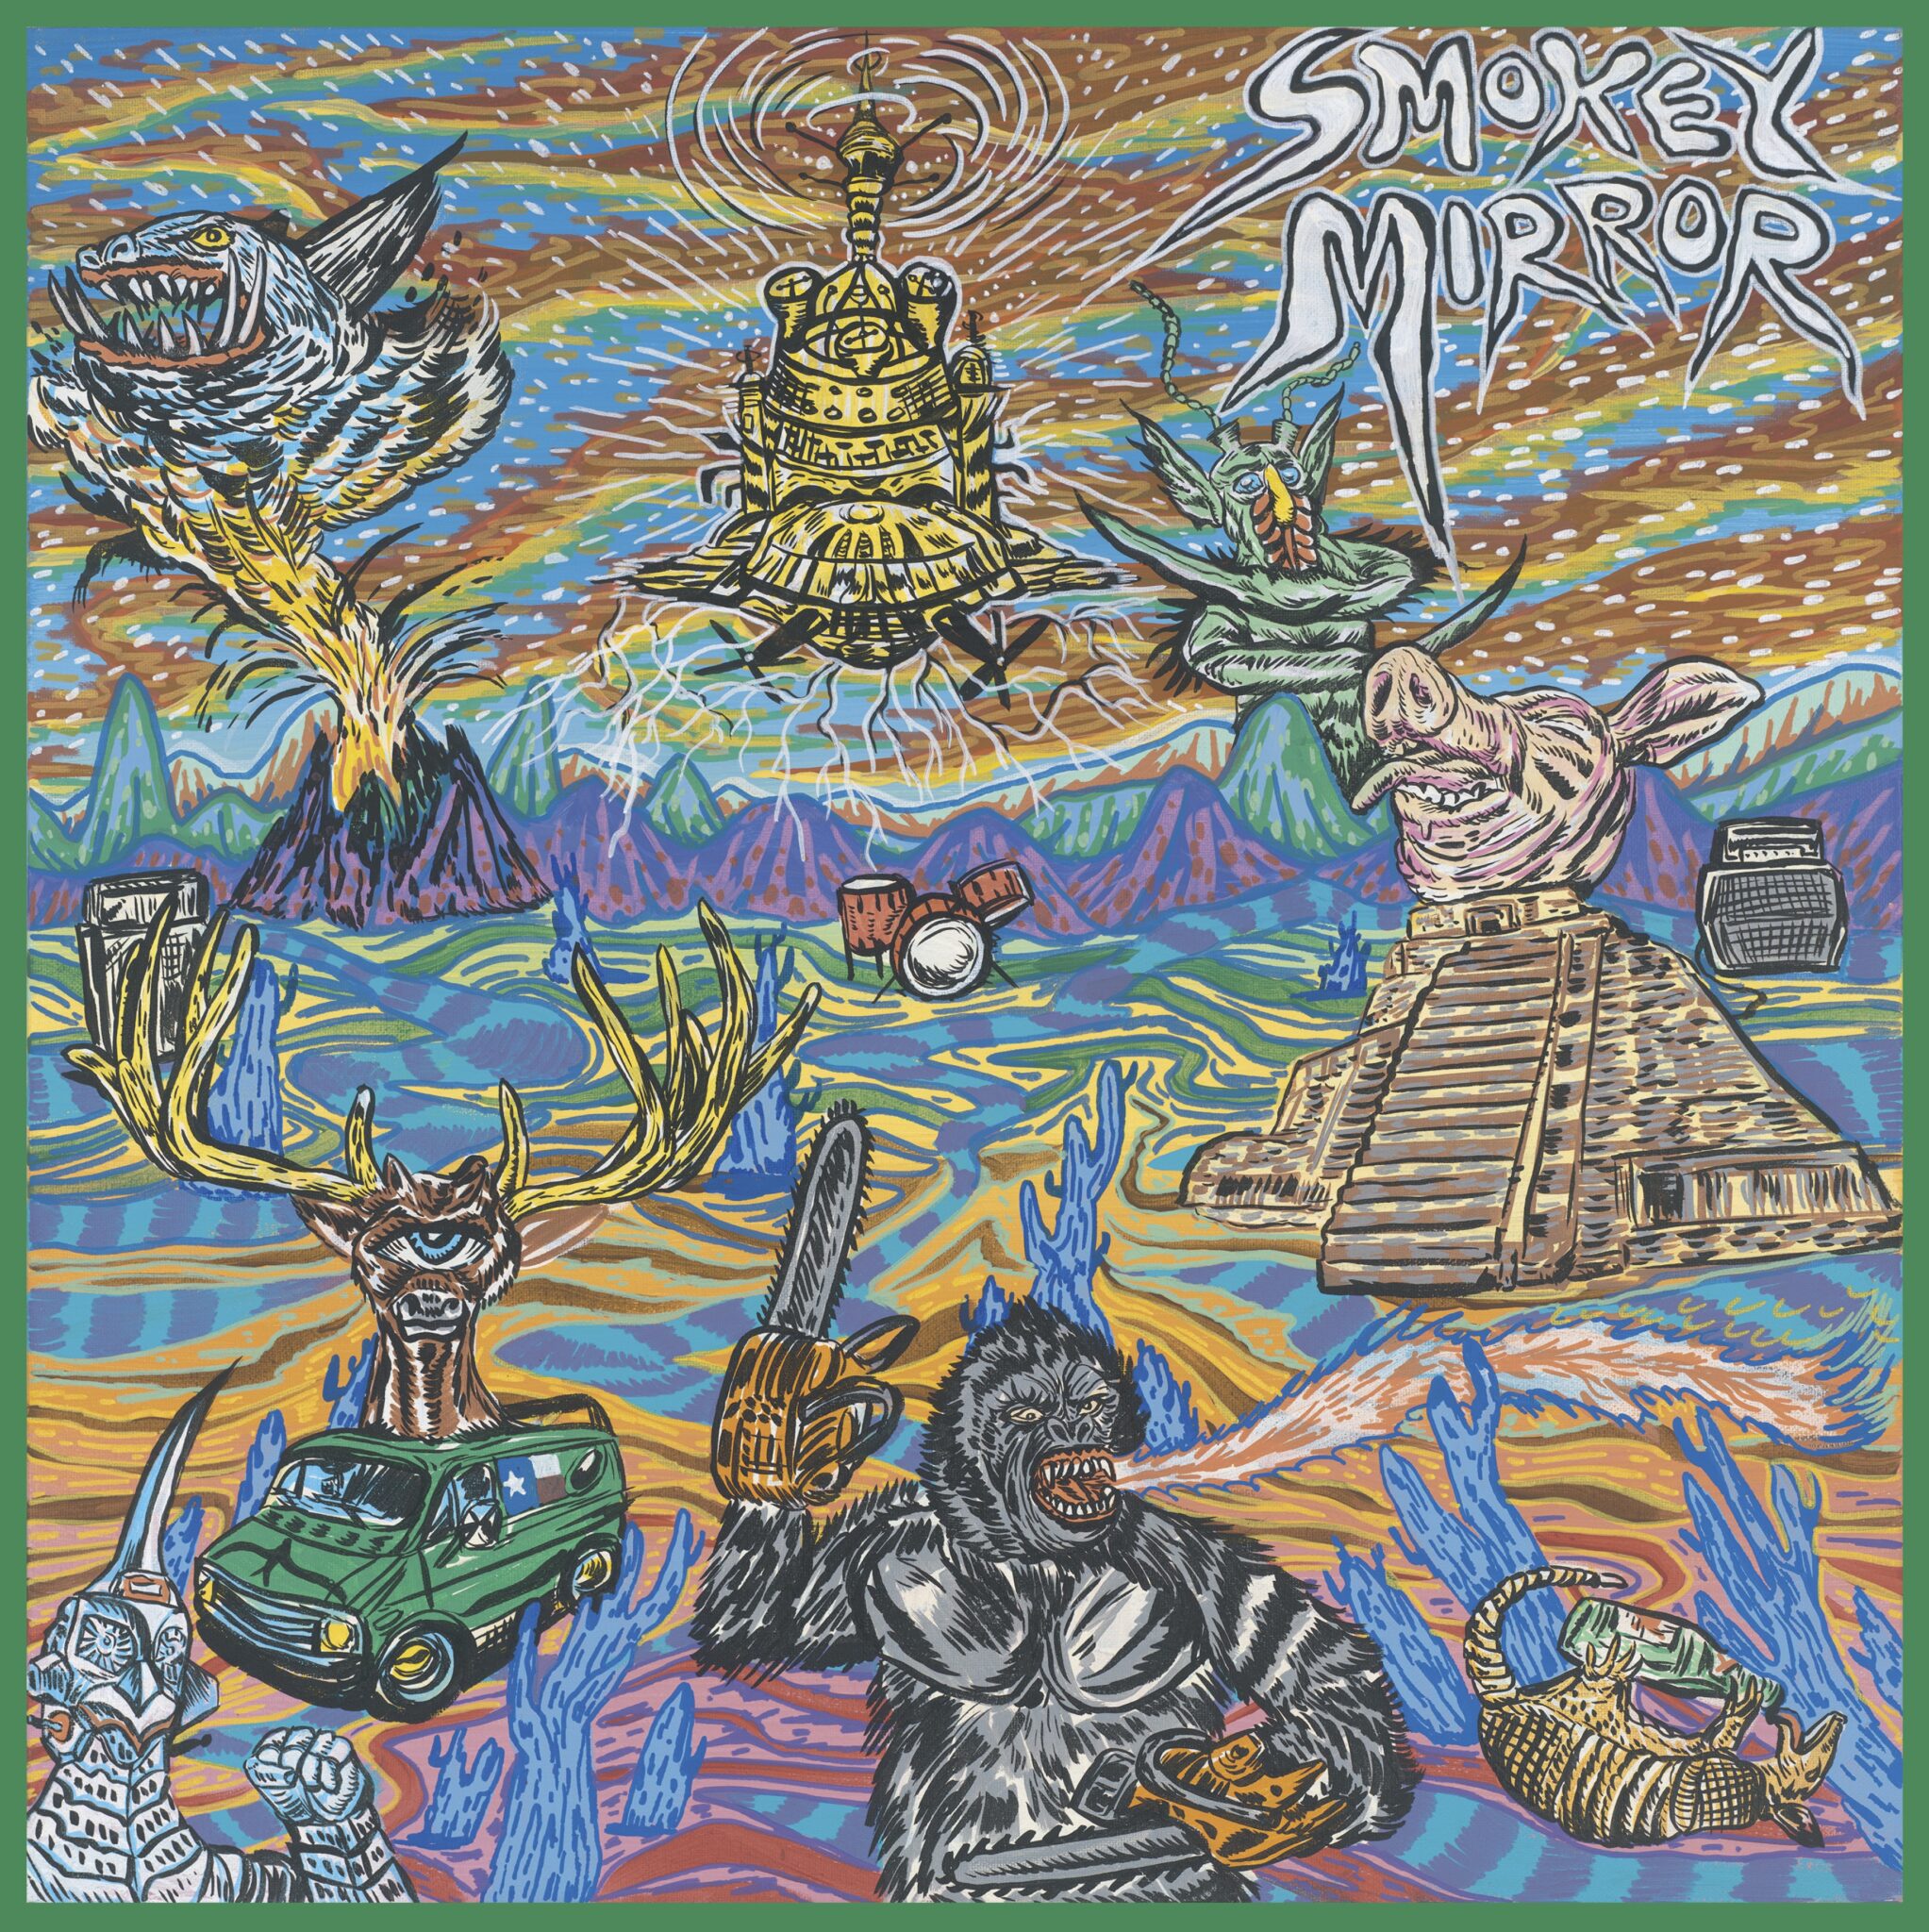 Smokey Mirror - Smokey Mirror (2023) Heavy Psych Boogie Blues desde Texas, Disco del Año! Smokey-Mirror-Orchard-scaled